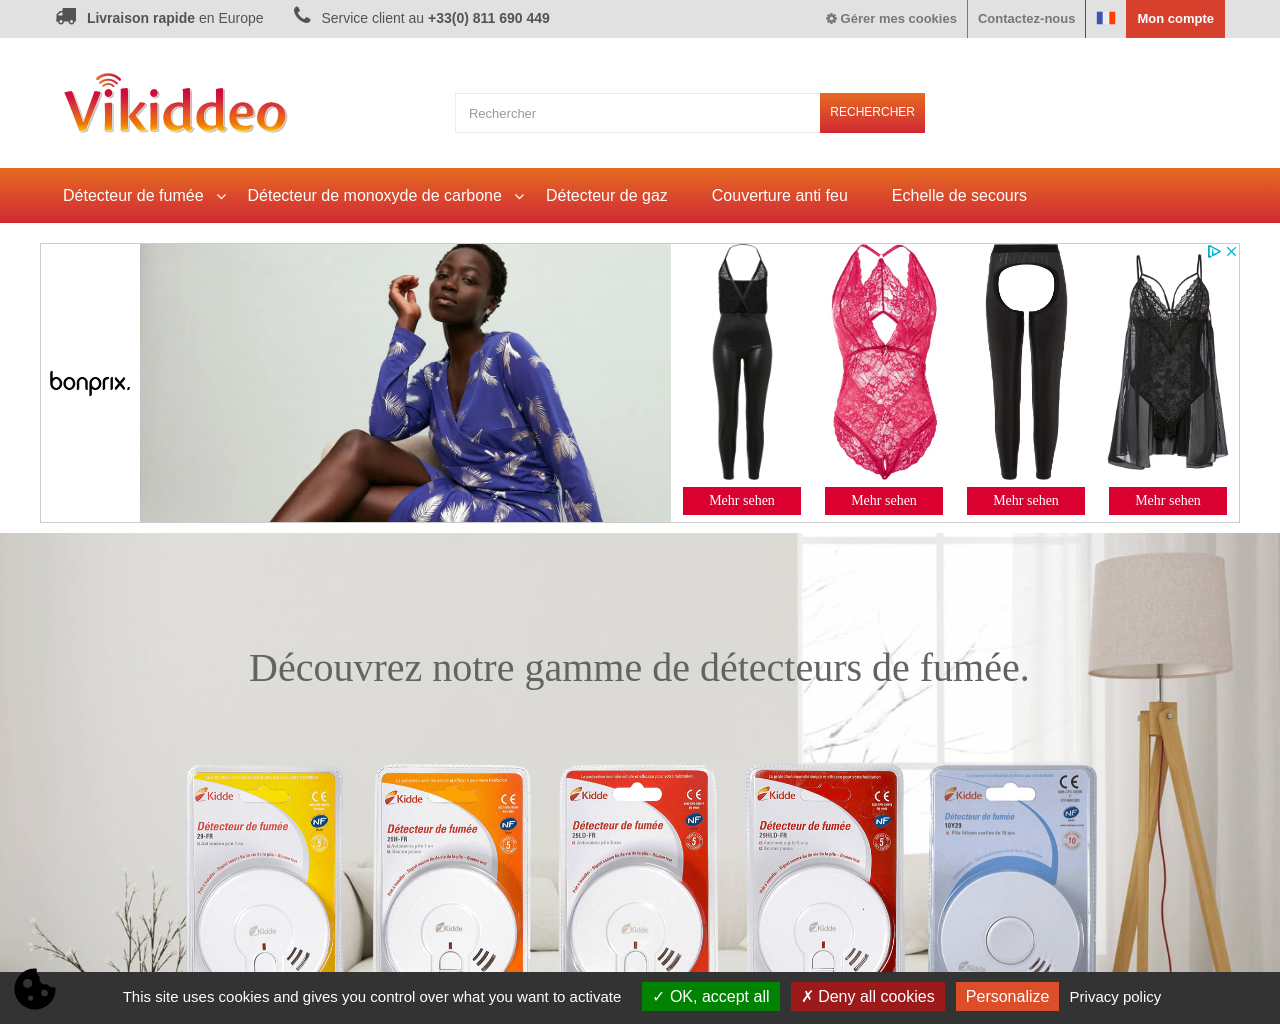 www.vikiddeo.fr